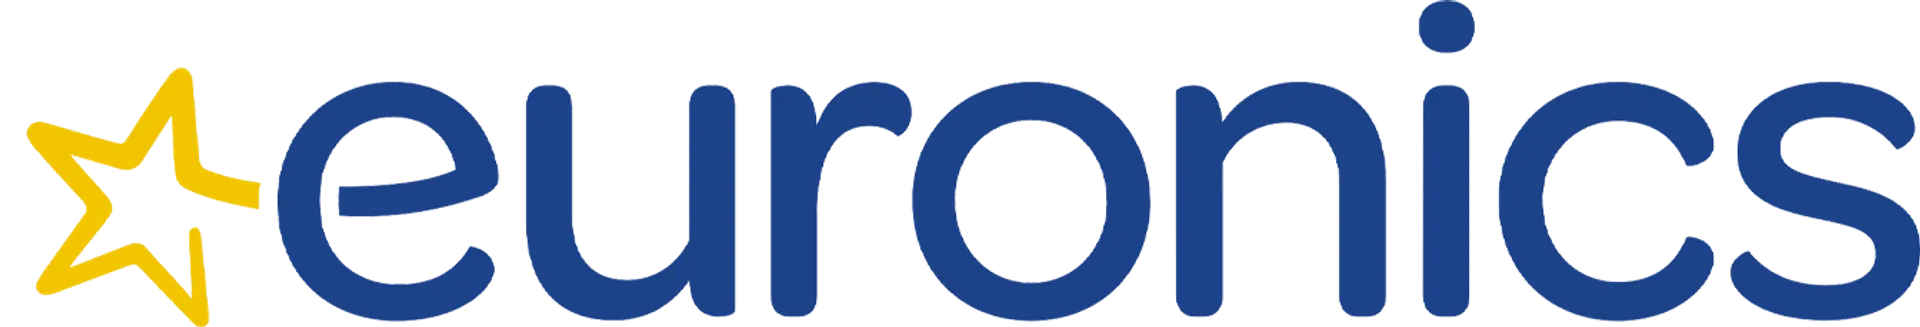 EURONICS logo. Current catalogue